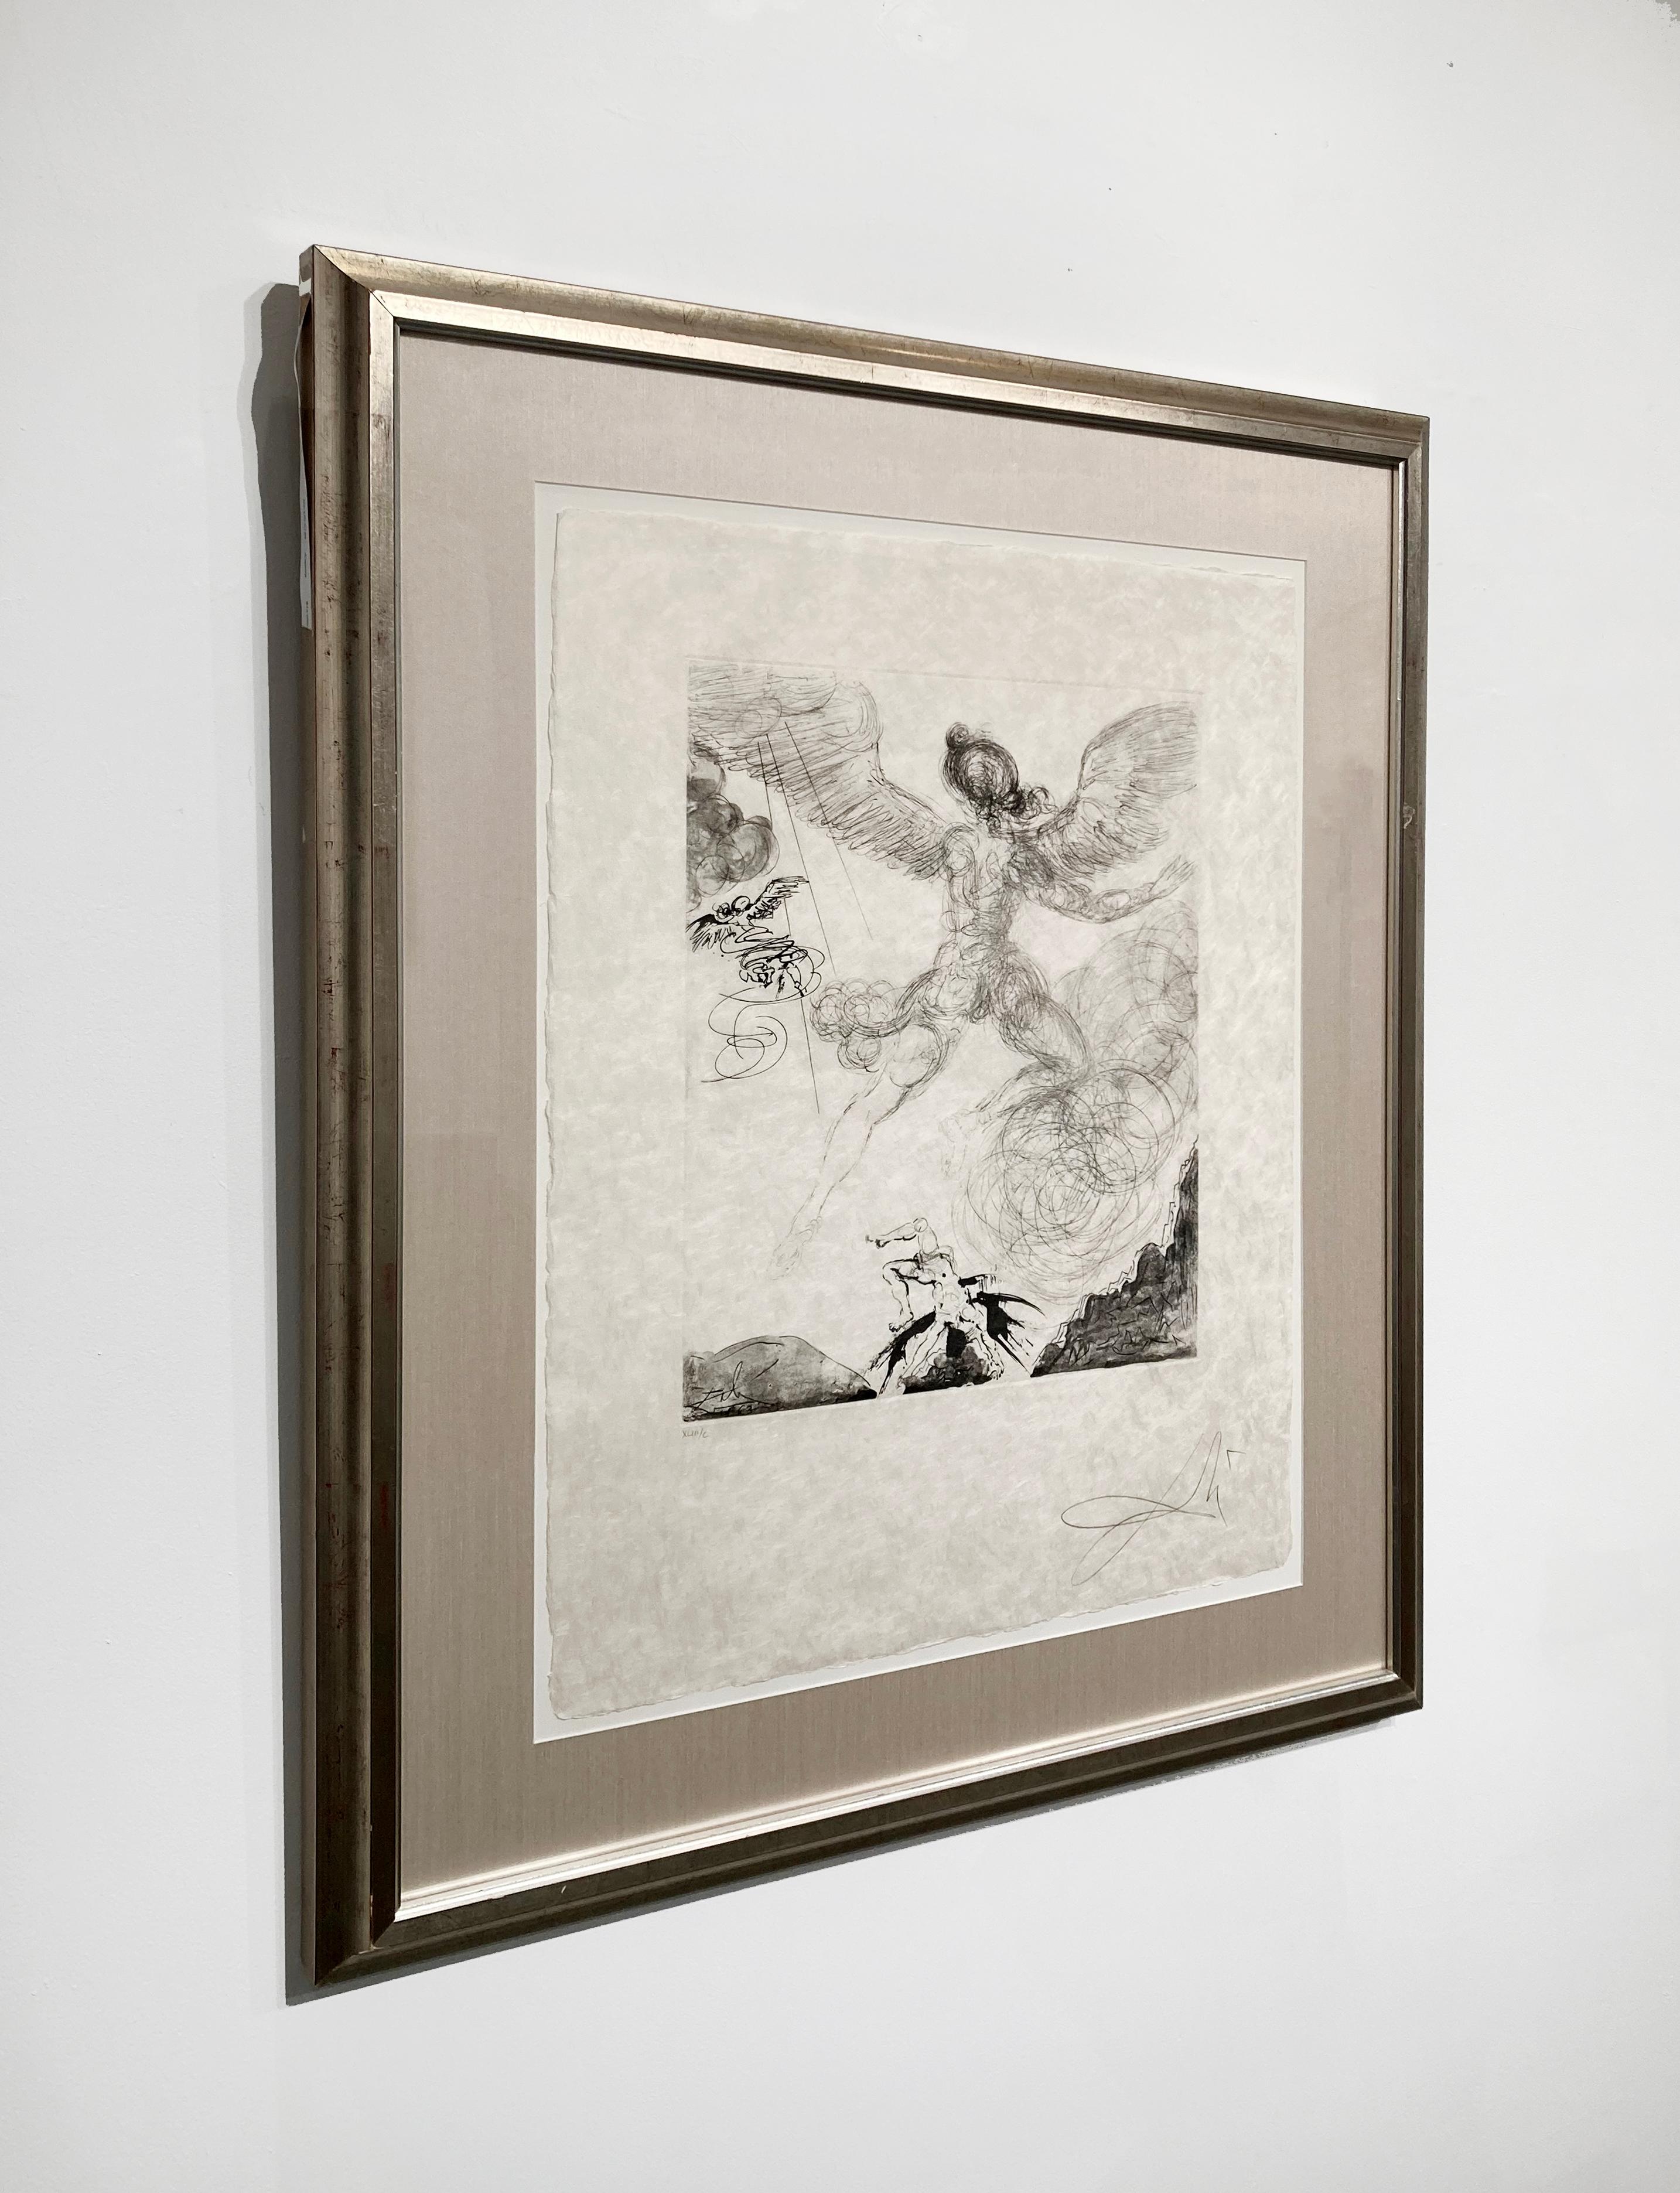 Artist:  Dali, Salvador
Title:  Icarus (Eolus)
Series:  The Mythology
Date:  1963
Medium:  drypoint
Unframed Dimensions:  30